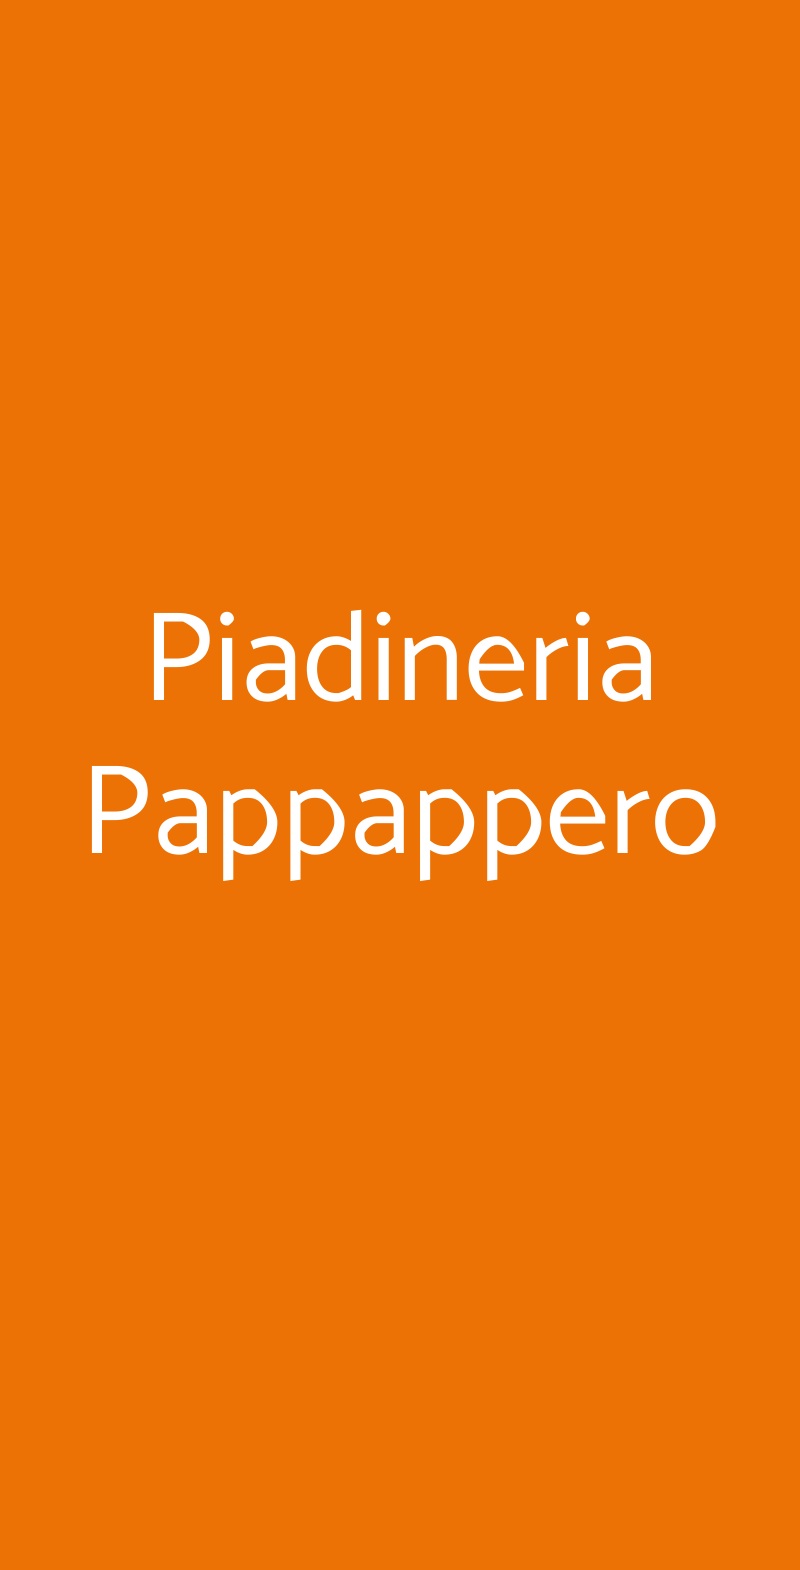 Piadineria Pappappero Milano menù 1 pagina